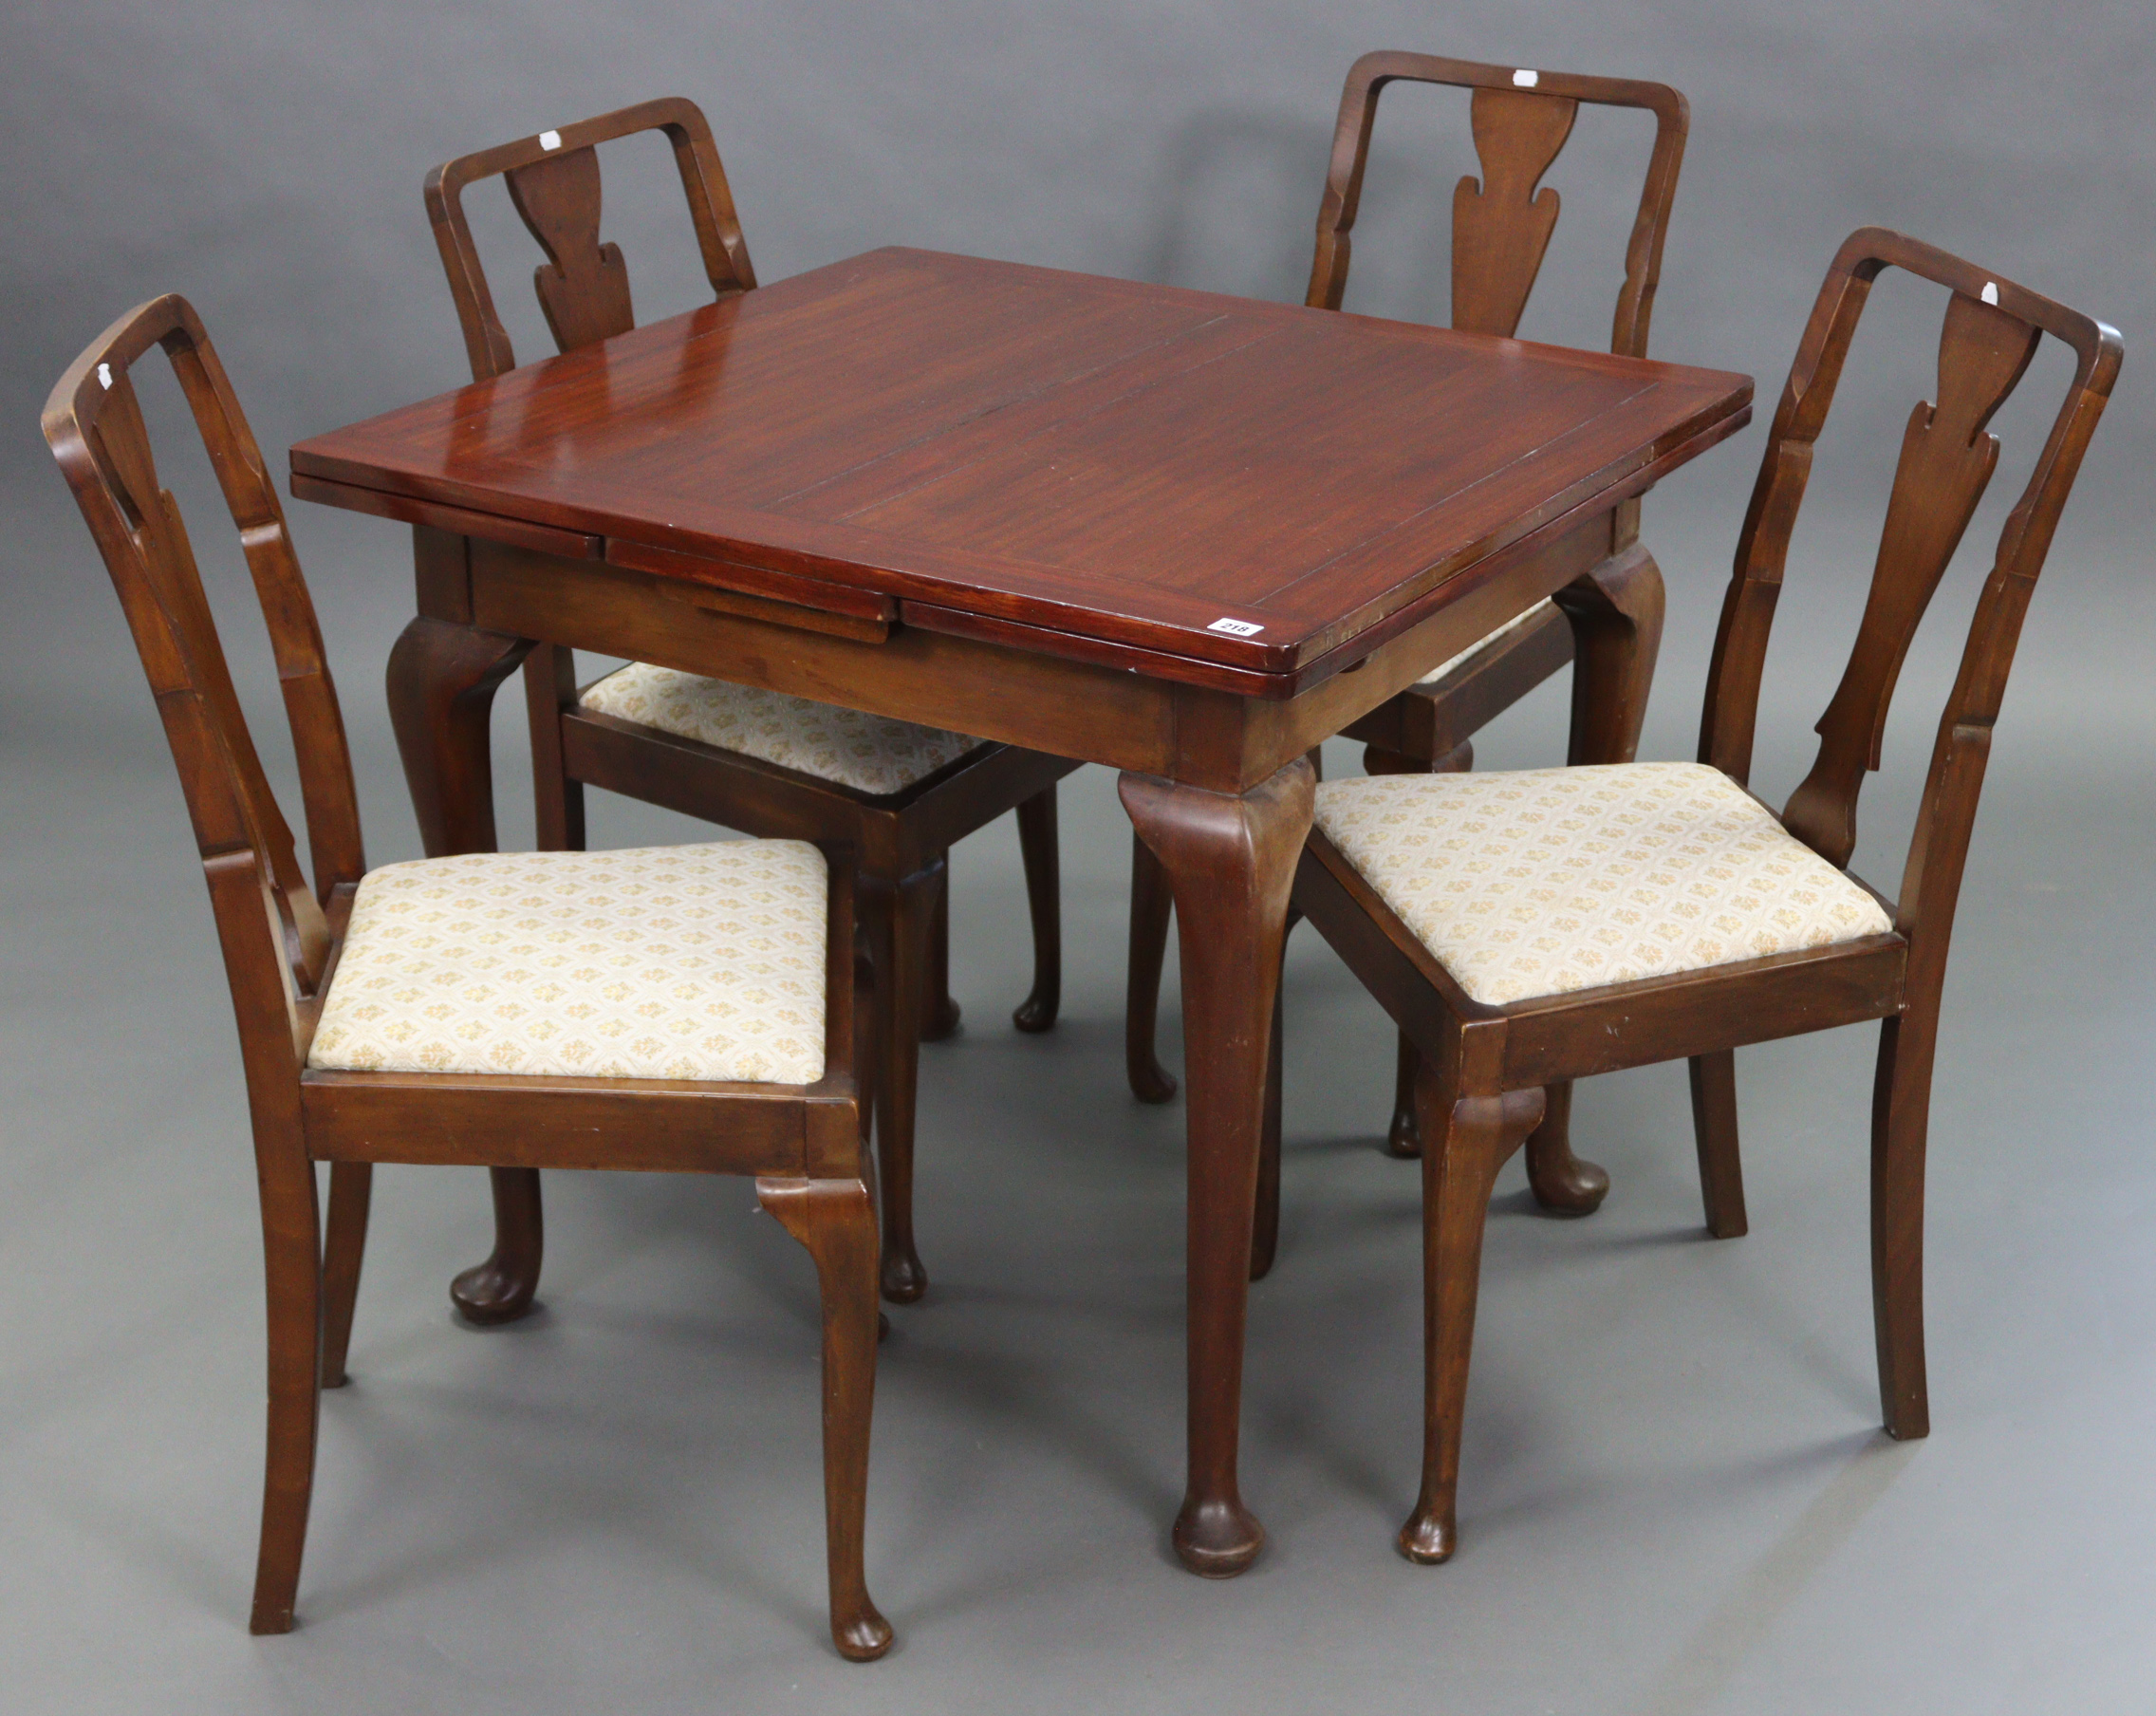 A mahogany draw-leaf dining table on four slender cabriole legs & pad feet, 32” x 57” (open), & a